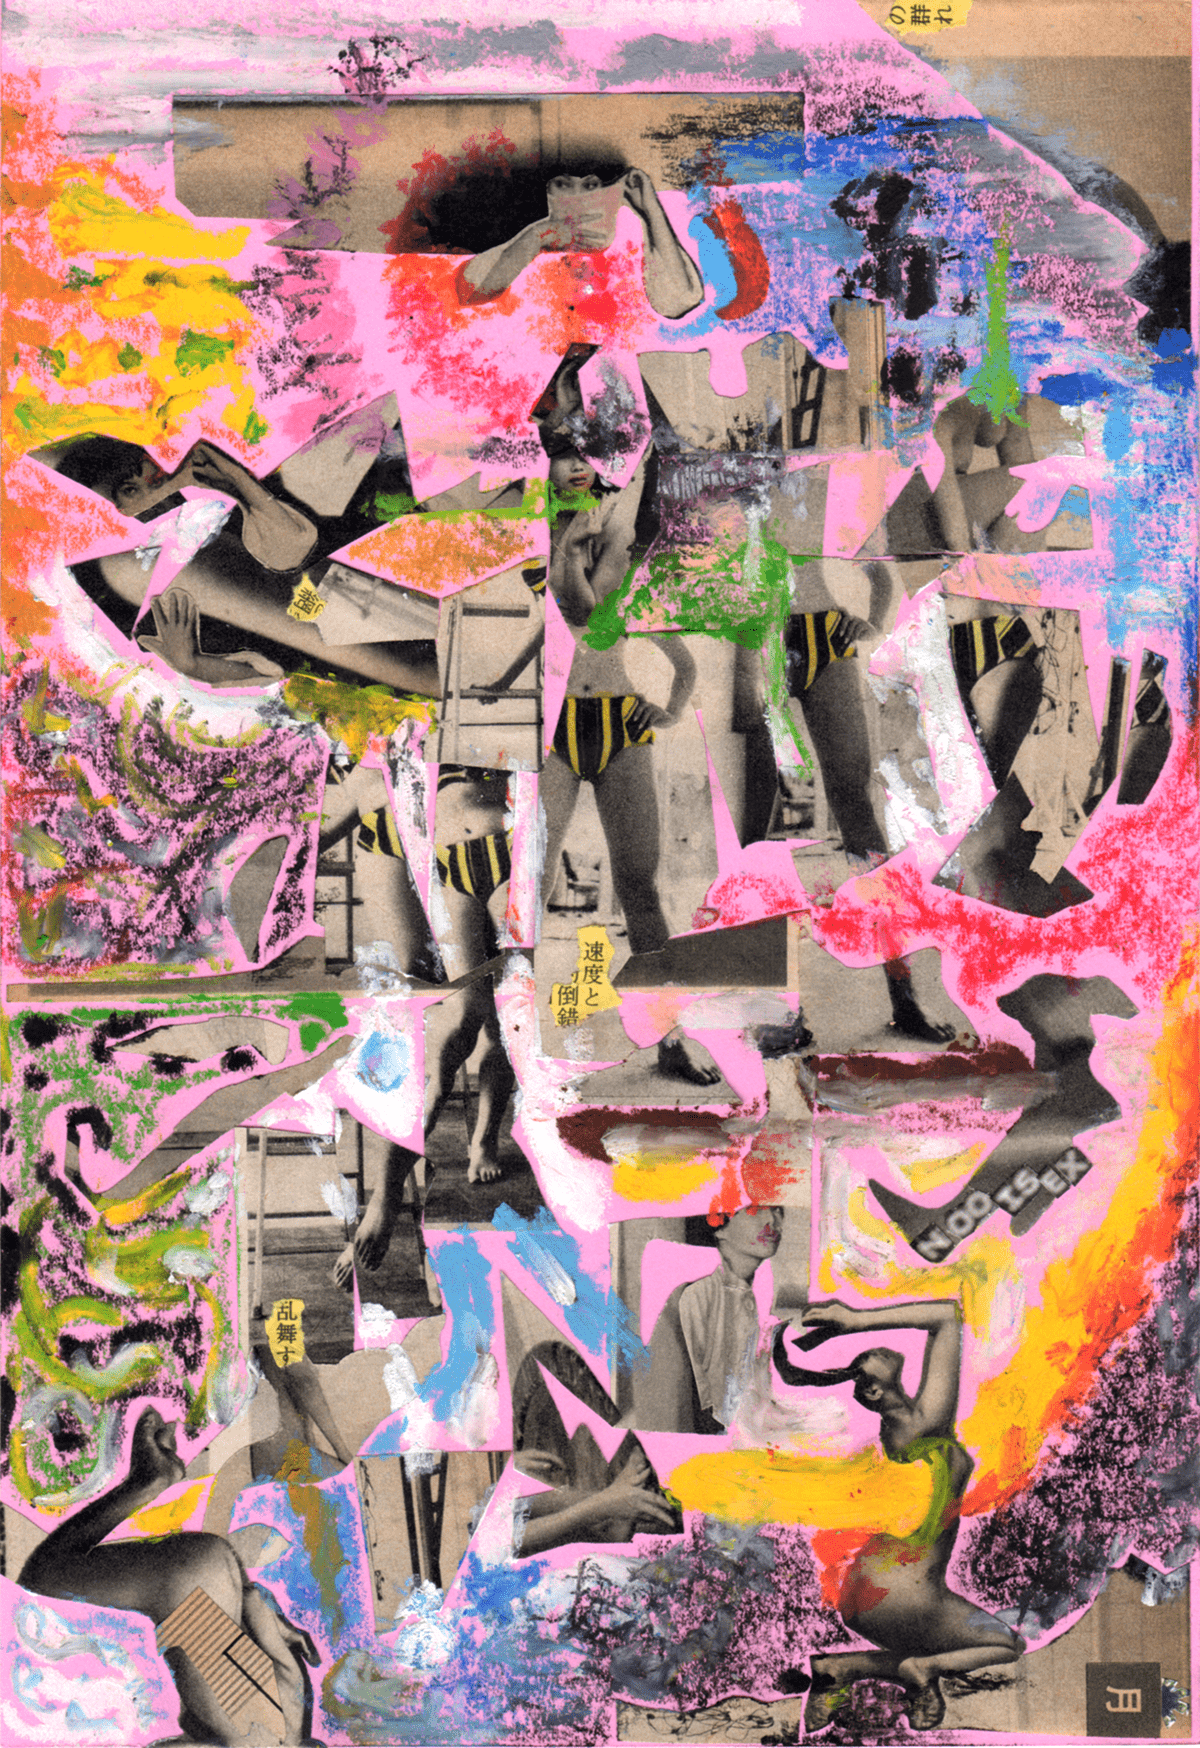 artwork bizarre collage Pop Art surreal abstract weird lowbrow analog collage collage artist